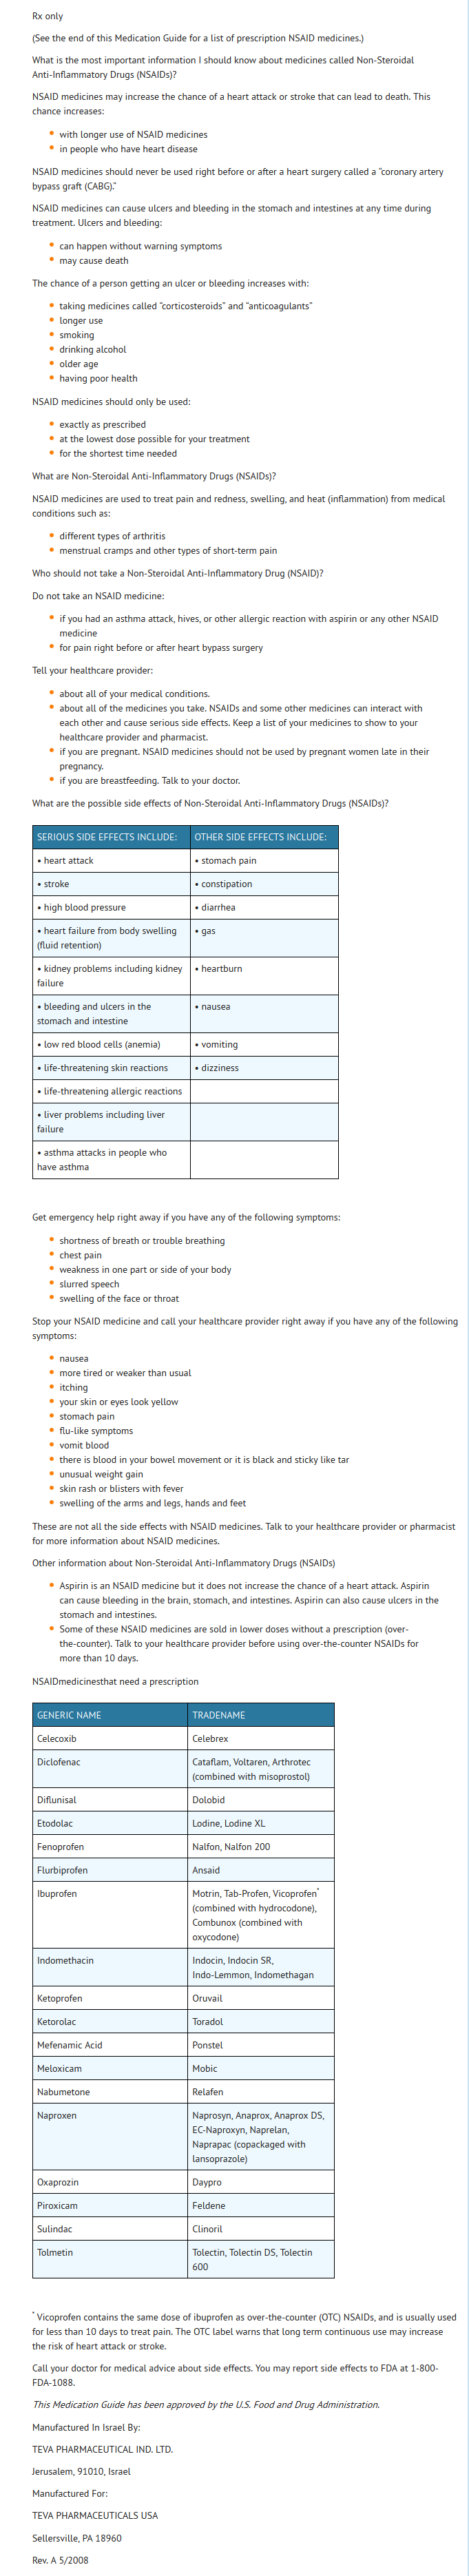 Etodolac medication guide.png